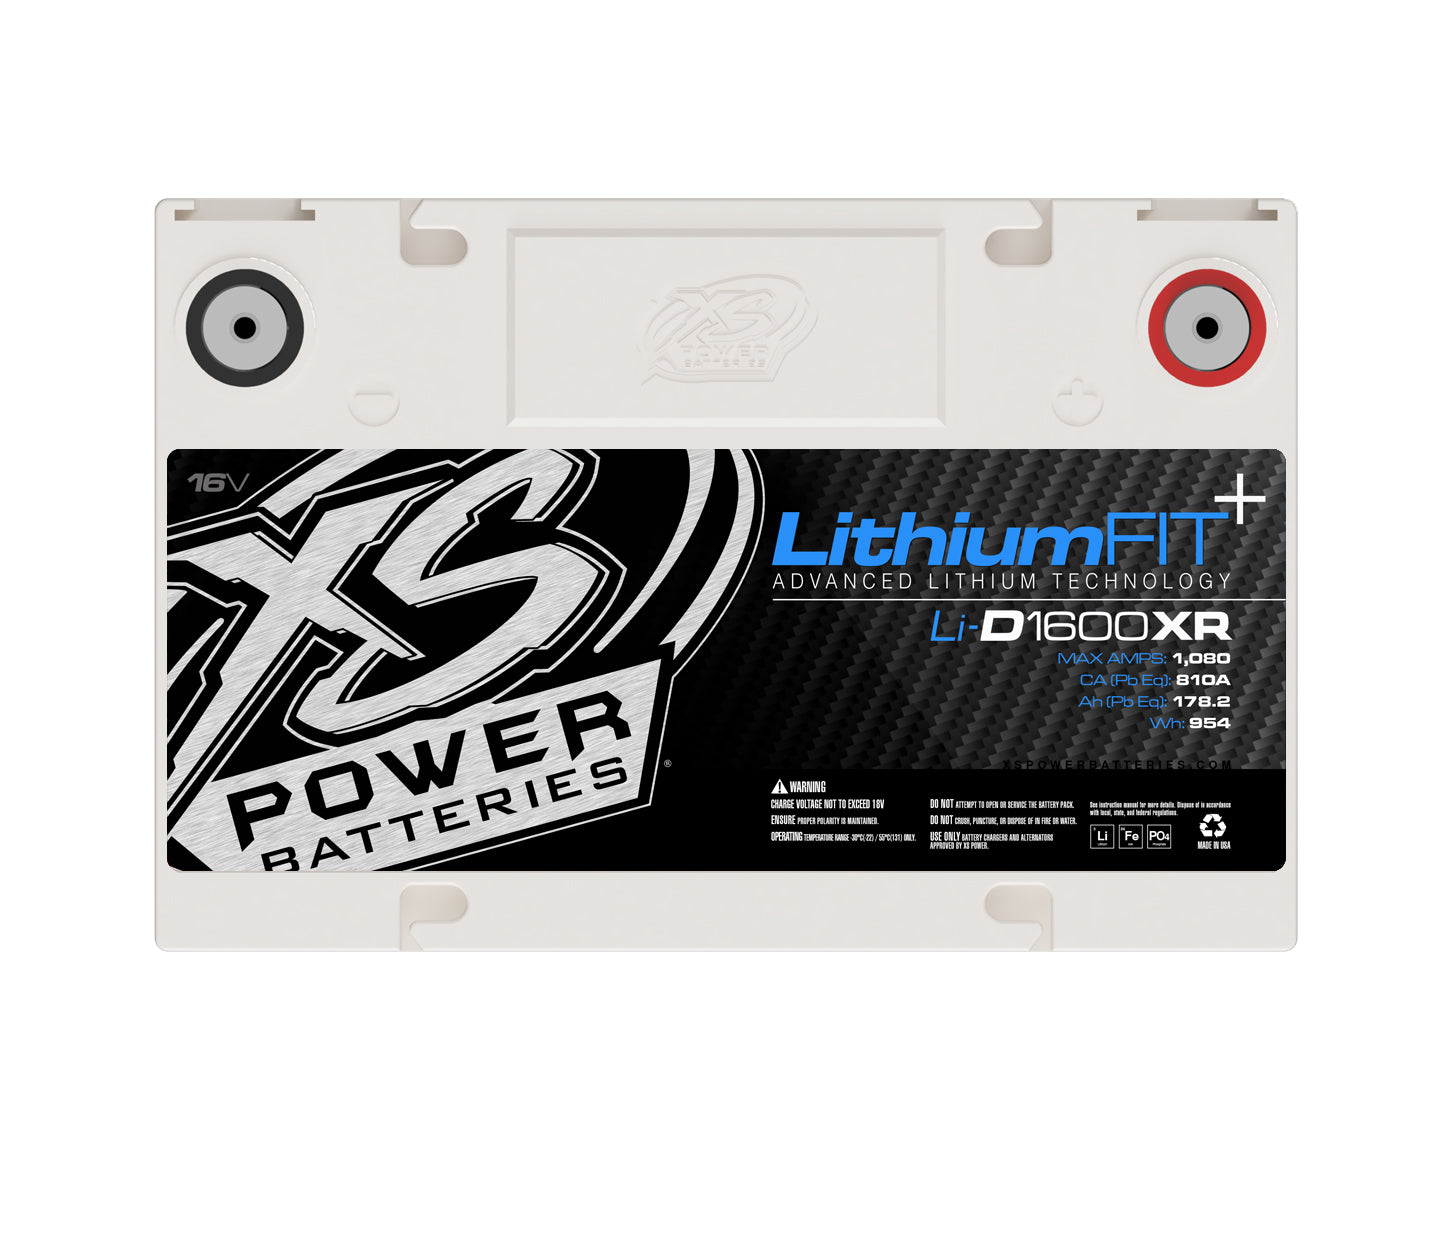 Li-D1600XR XS Power 16VDC Lithium Racing Vehicle Battery 1080A 59.4Ah Group 34